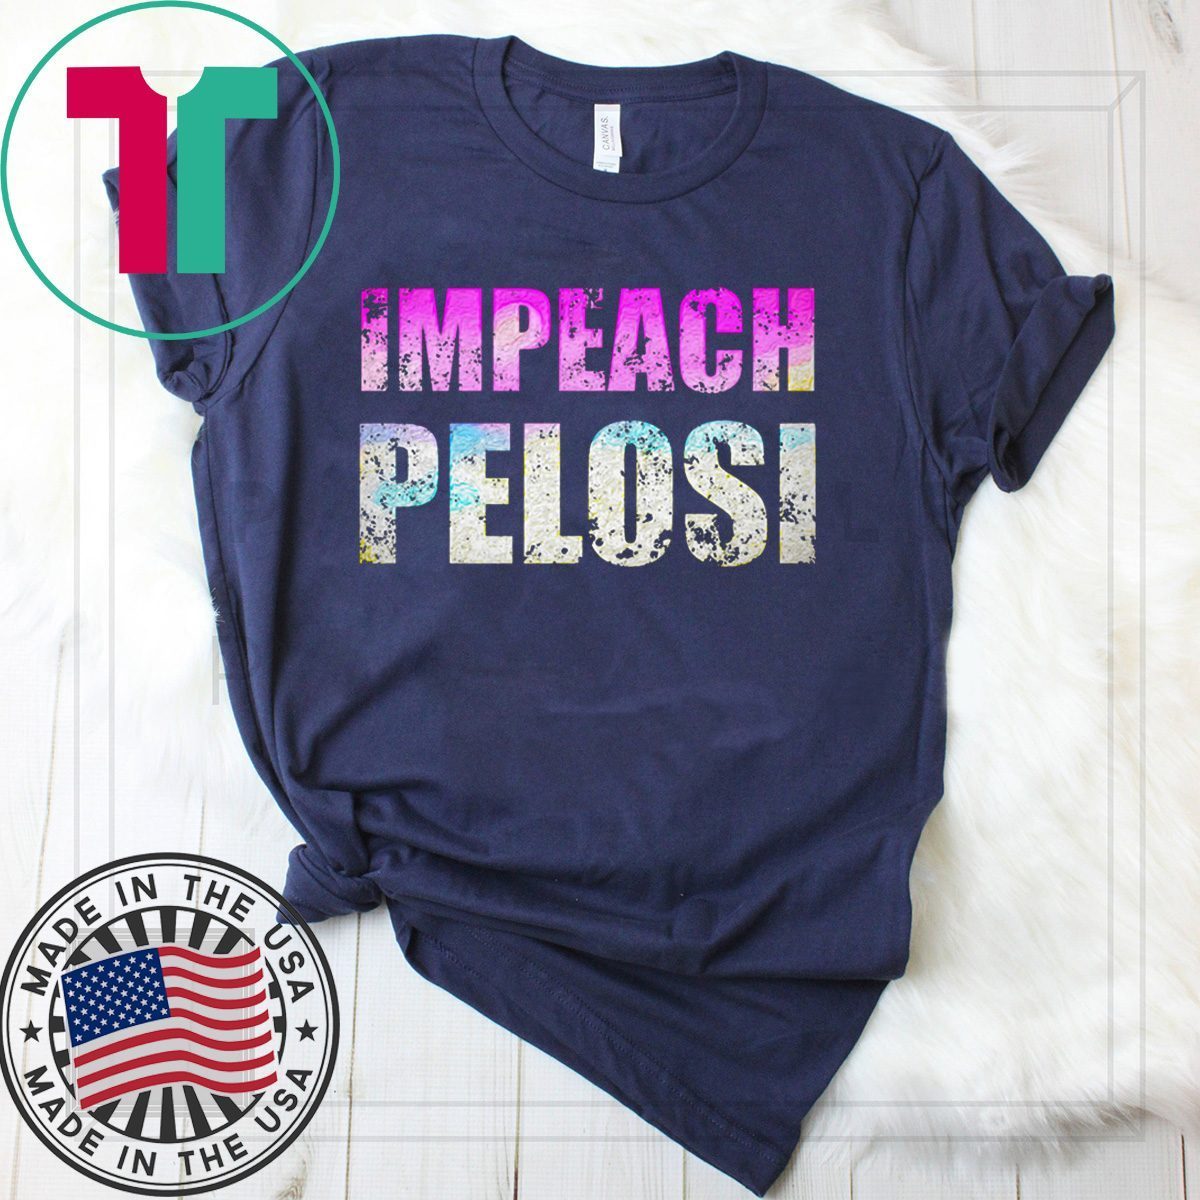 Impeach nancy pelosi Shirt